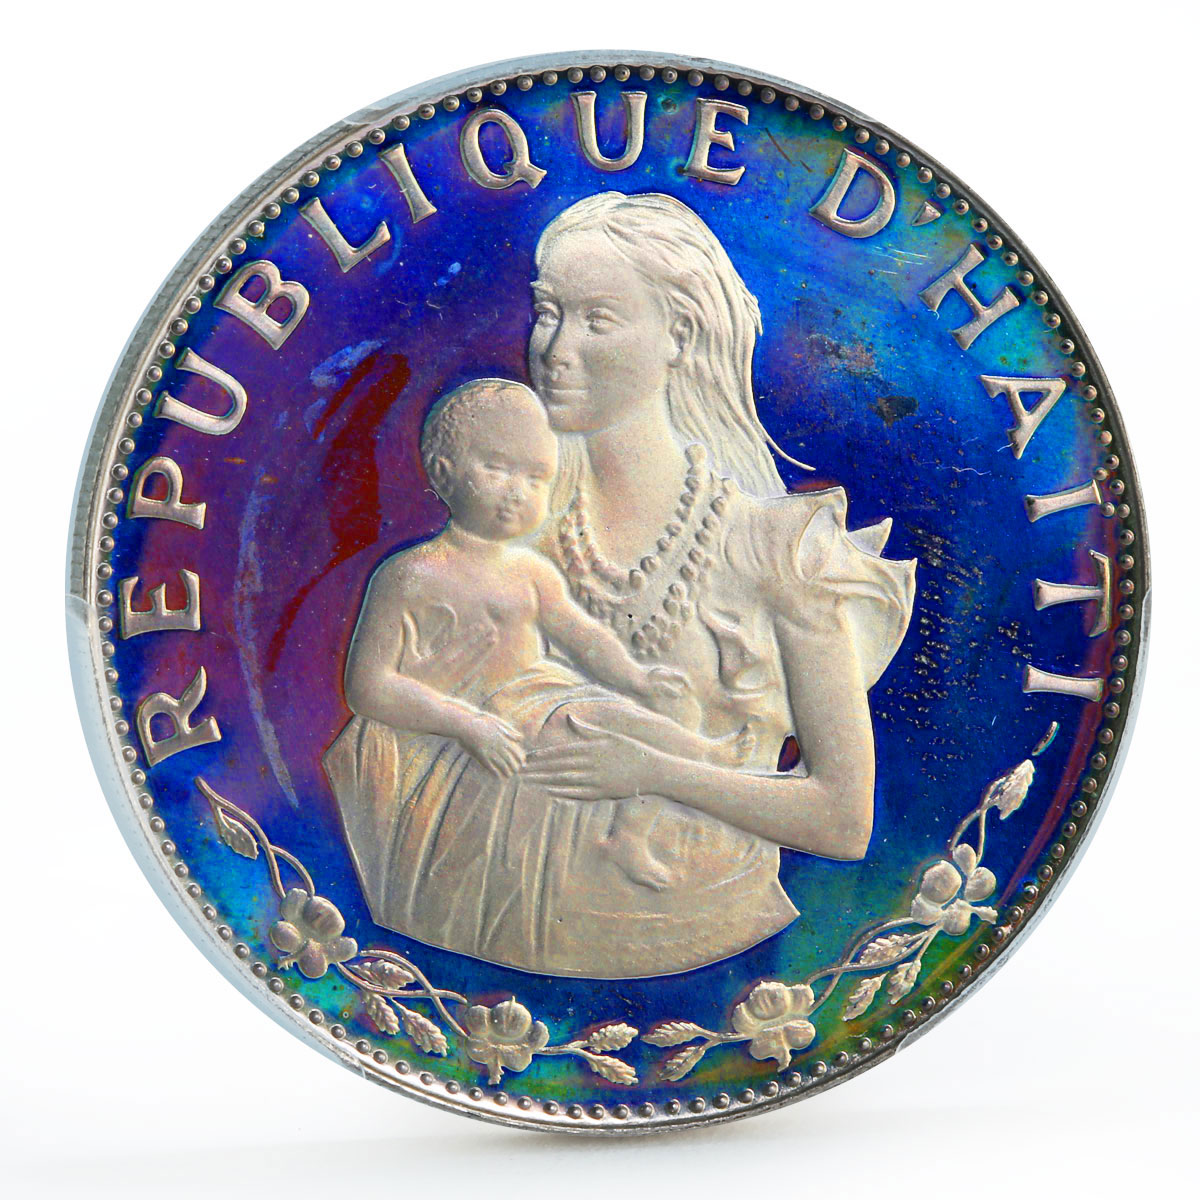 Haiti 50 gourdes The Mother PR67 PCGS Rainbow Reflectivity silver coin 1973